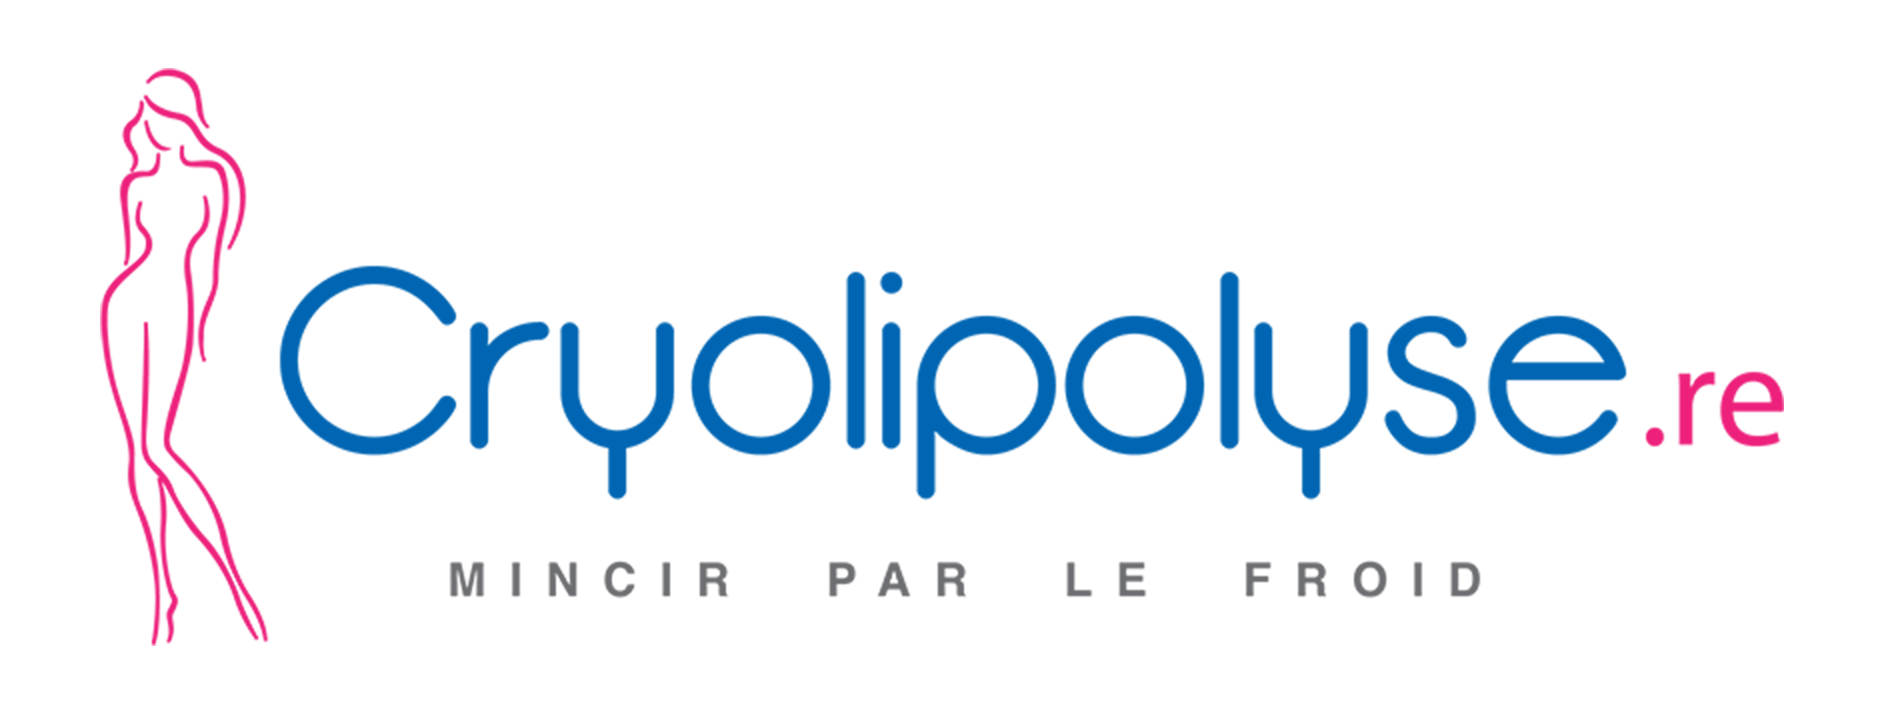 CRYOLIPOLYSE logo